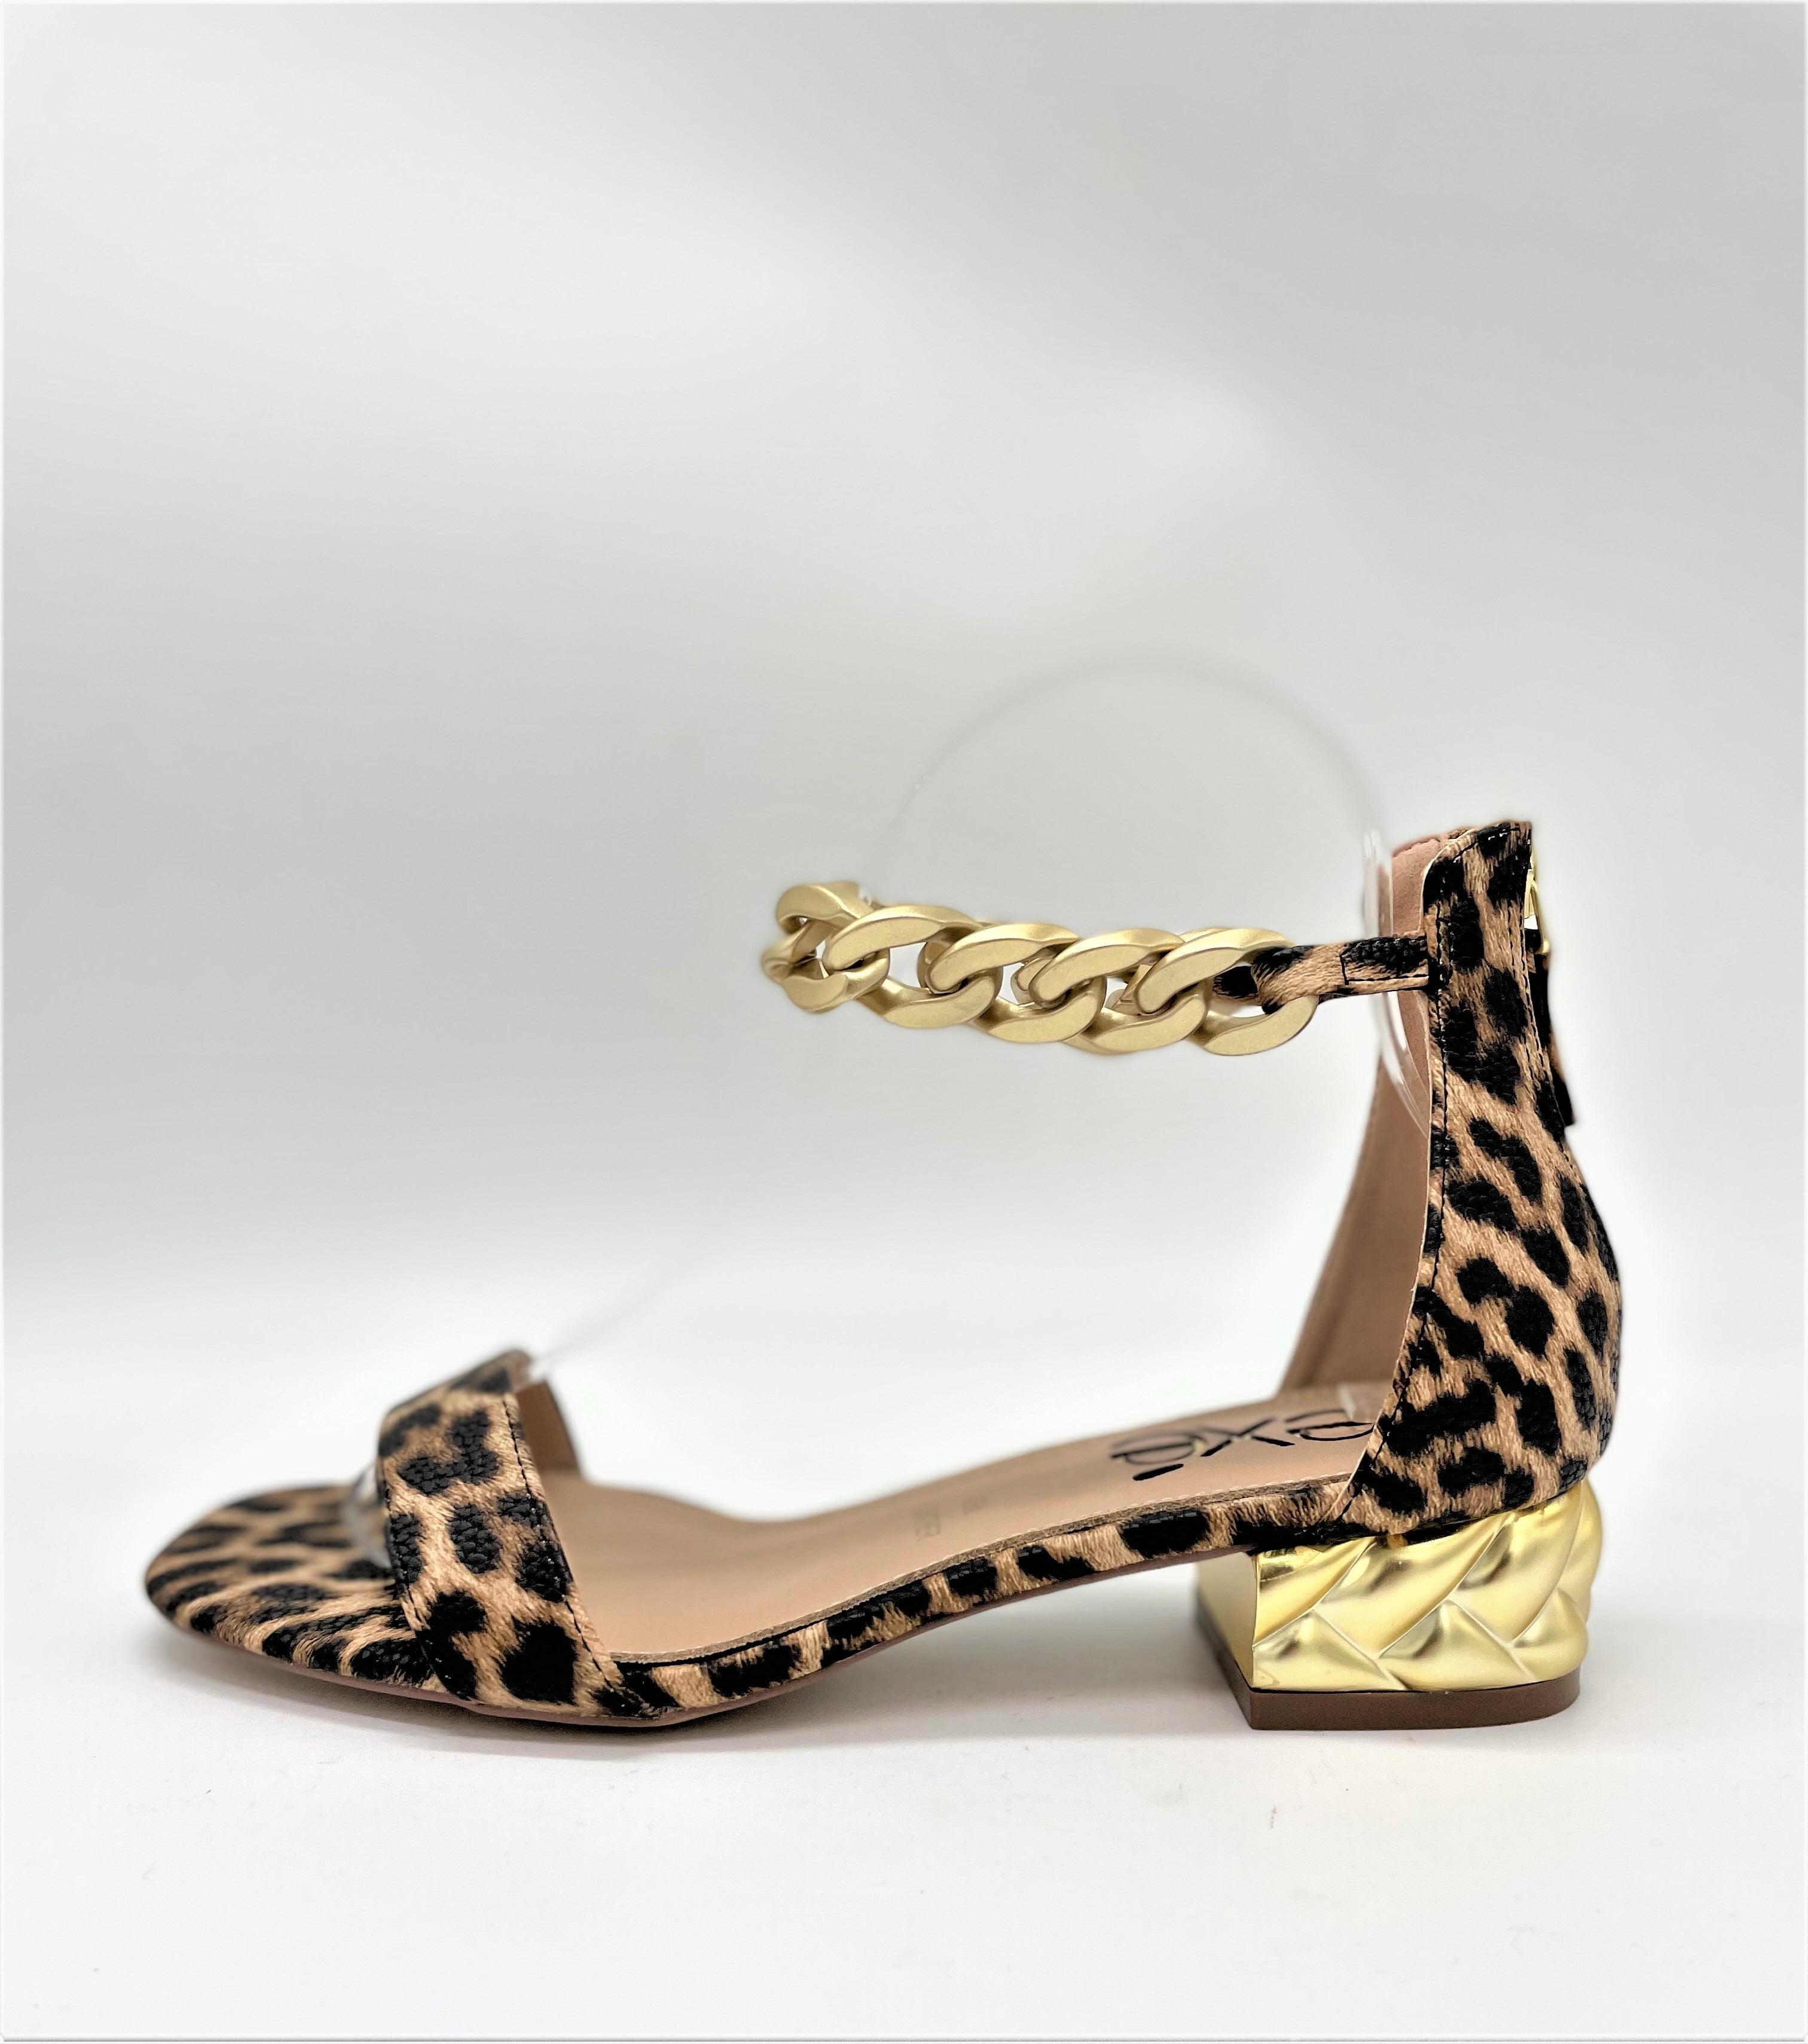 Elegant Black And Gold High Heel Sandals Luxury Designer Womens Footwear  For Weddings And Formal Dinners From Kk2318, $71.11 | DHgate.Com